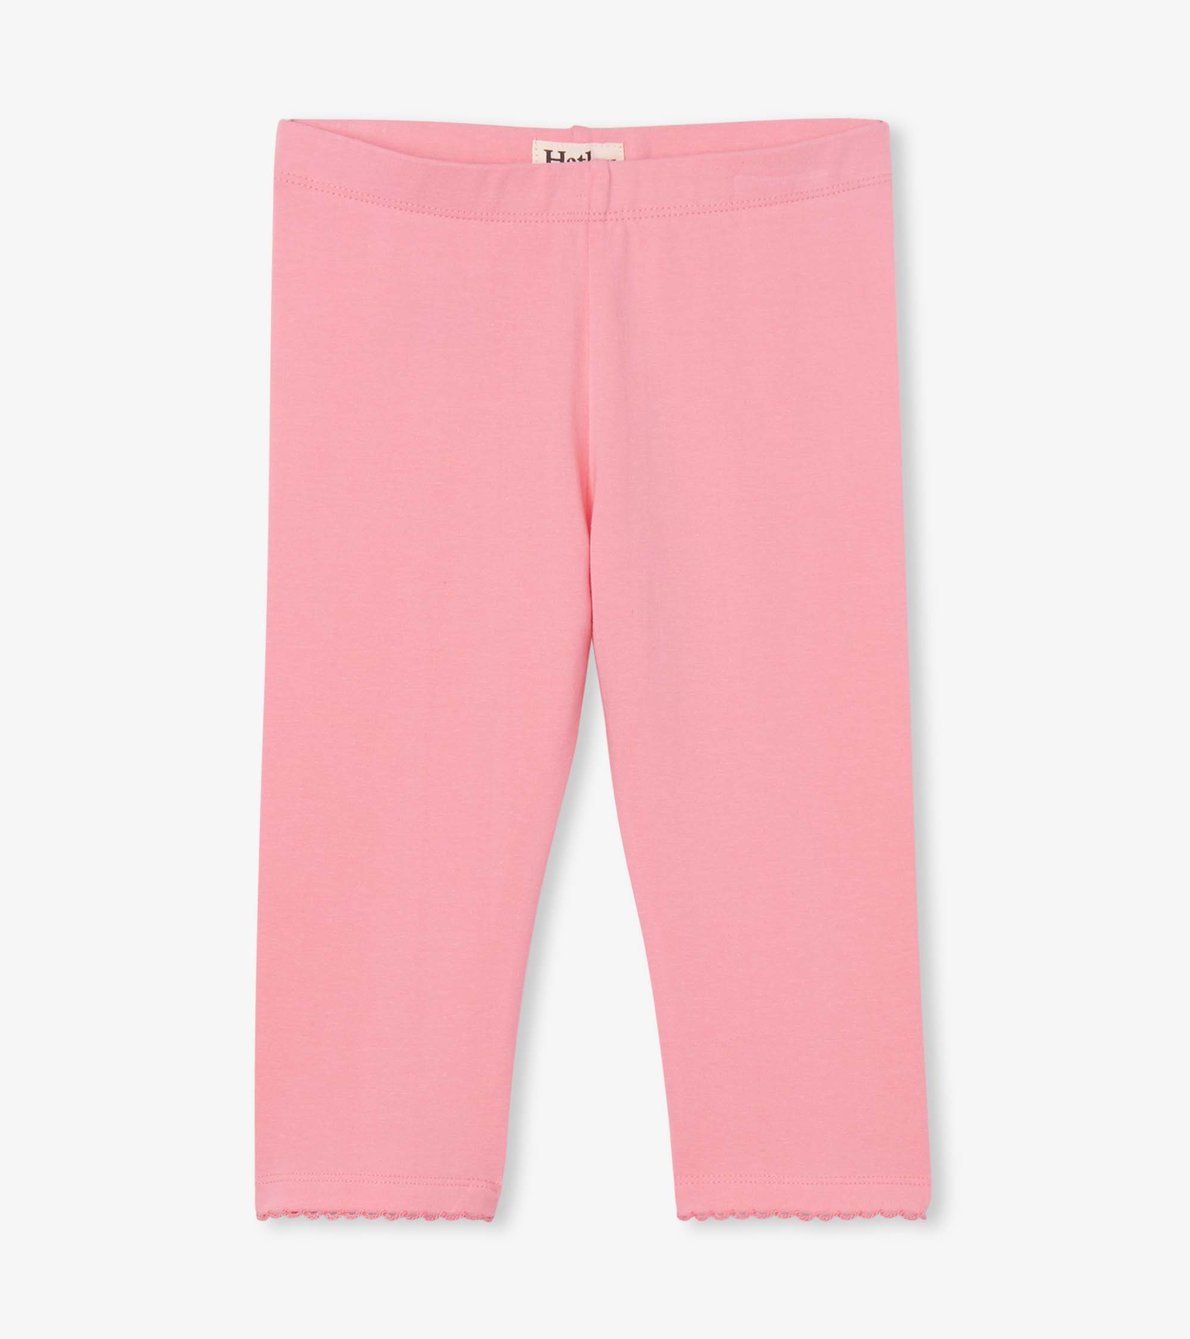 View larger image of Light Pink Capri Leggings